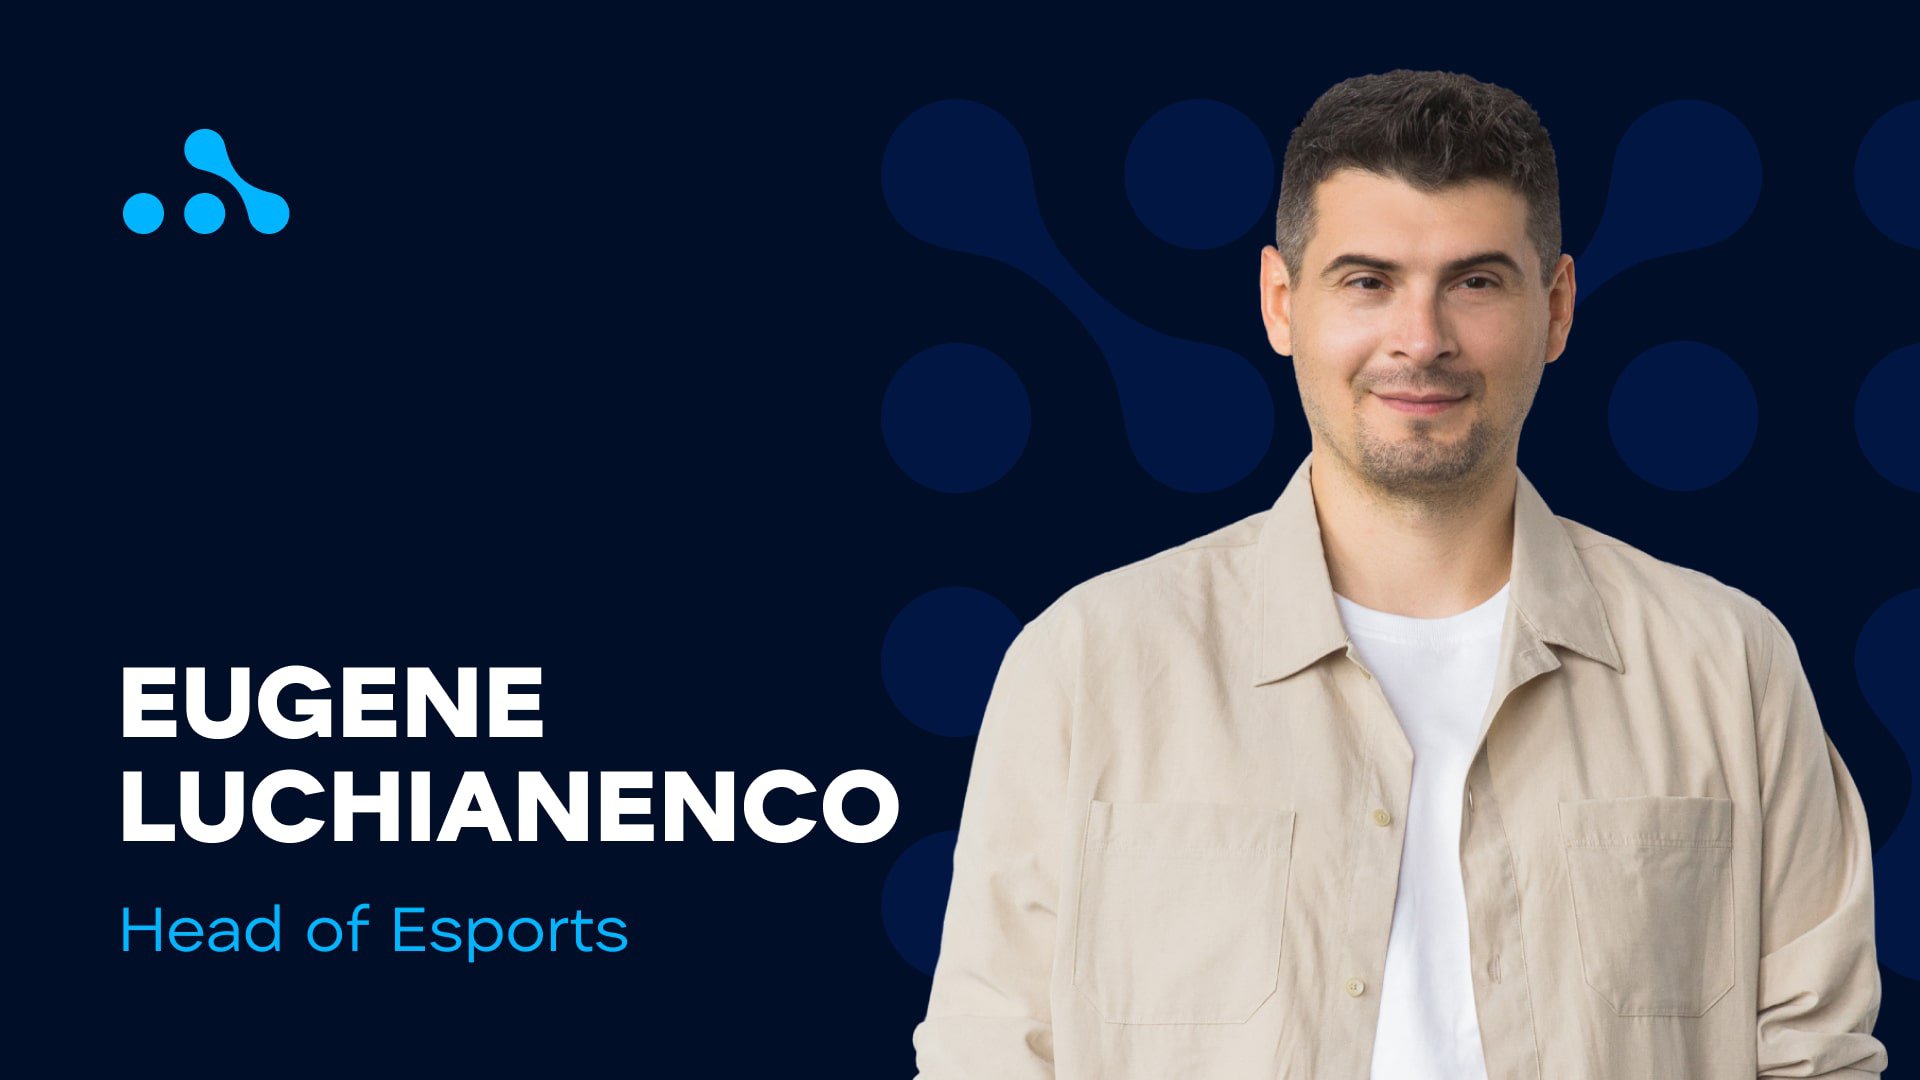 Eugene Luchianenco, Head of Esports at WePlay Esports